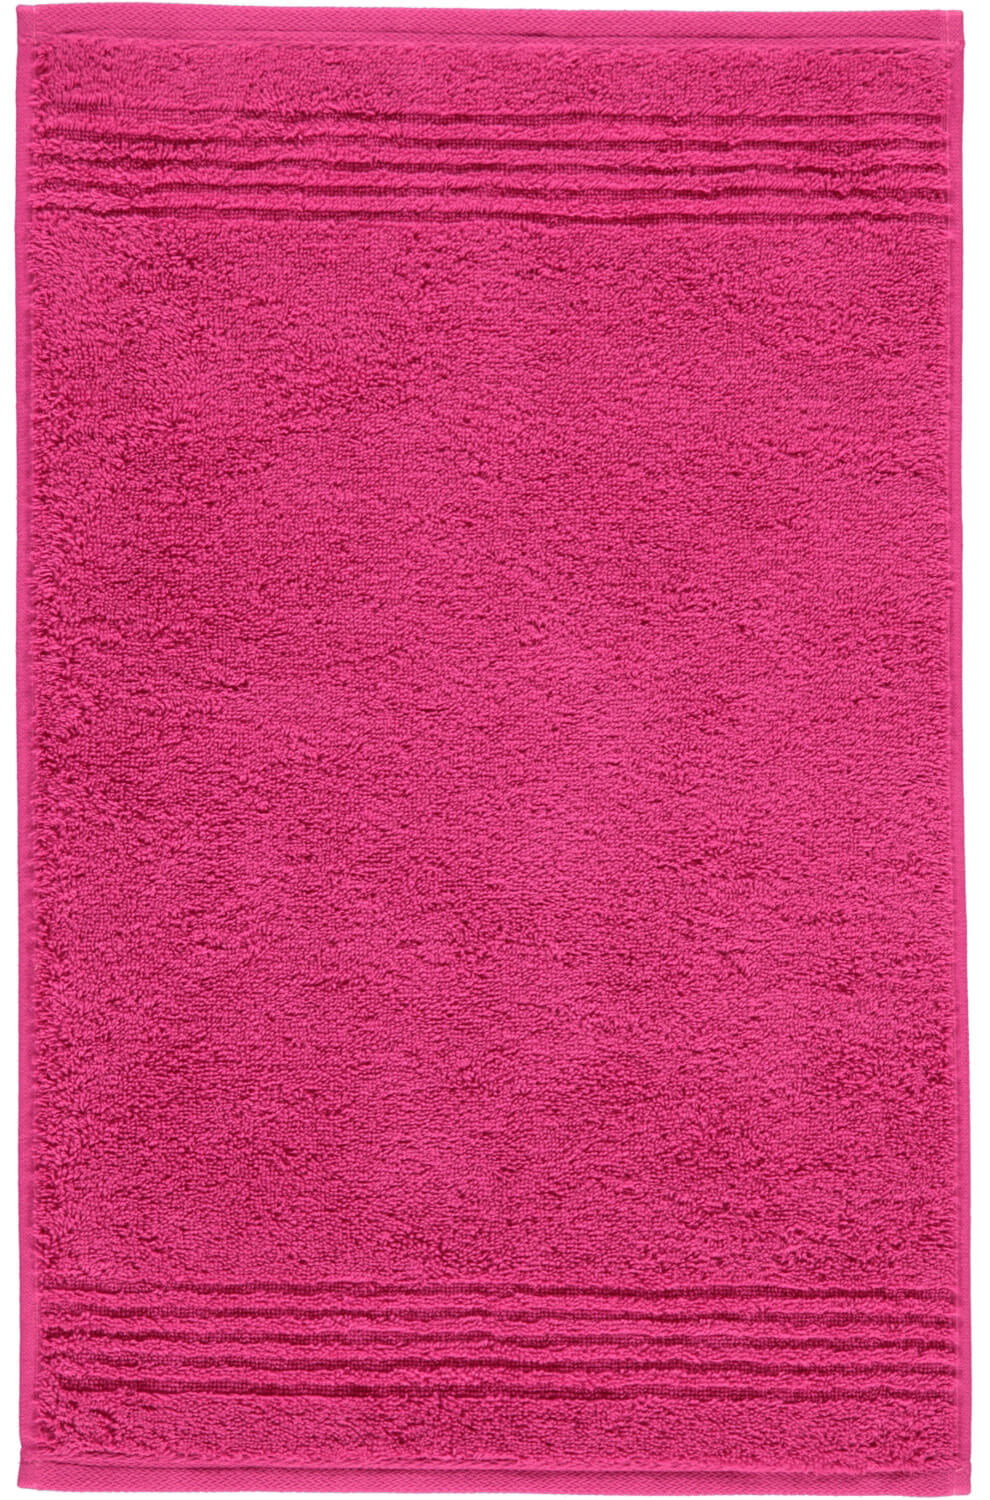 Розовое полотенце Essential Pink ☞ Размер: 30 x 30 см